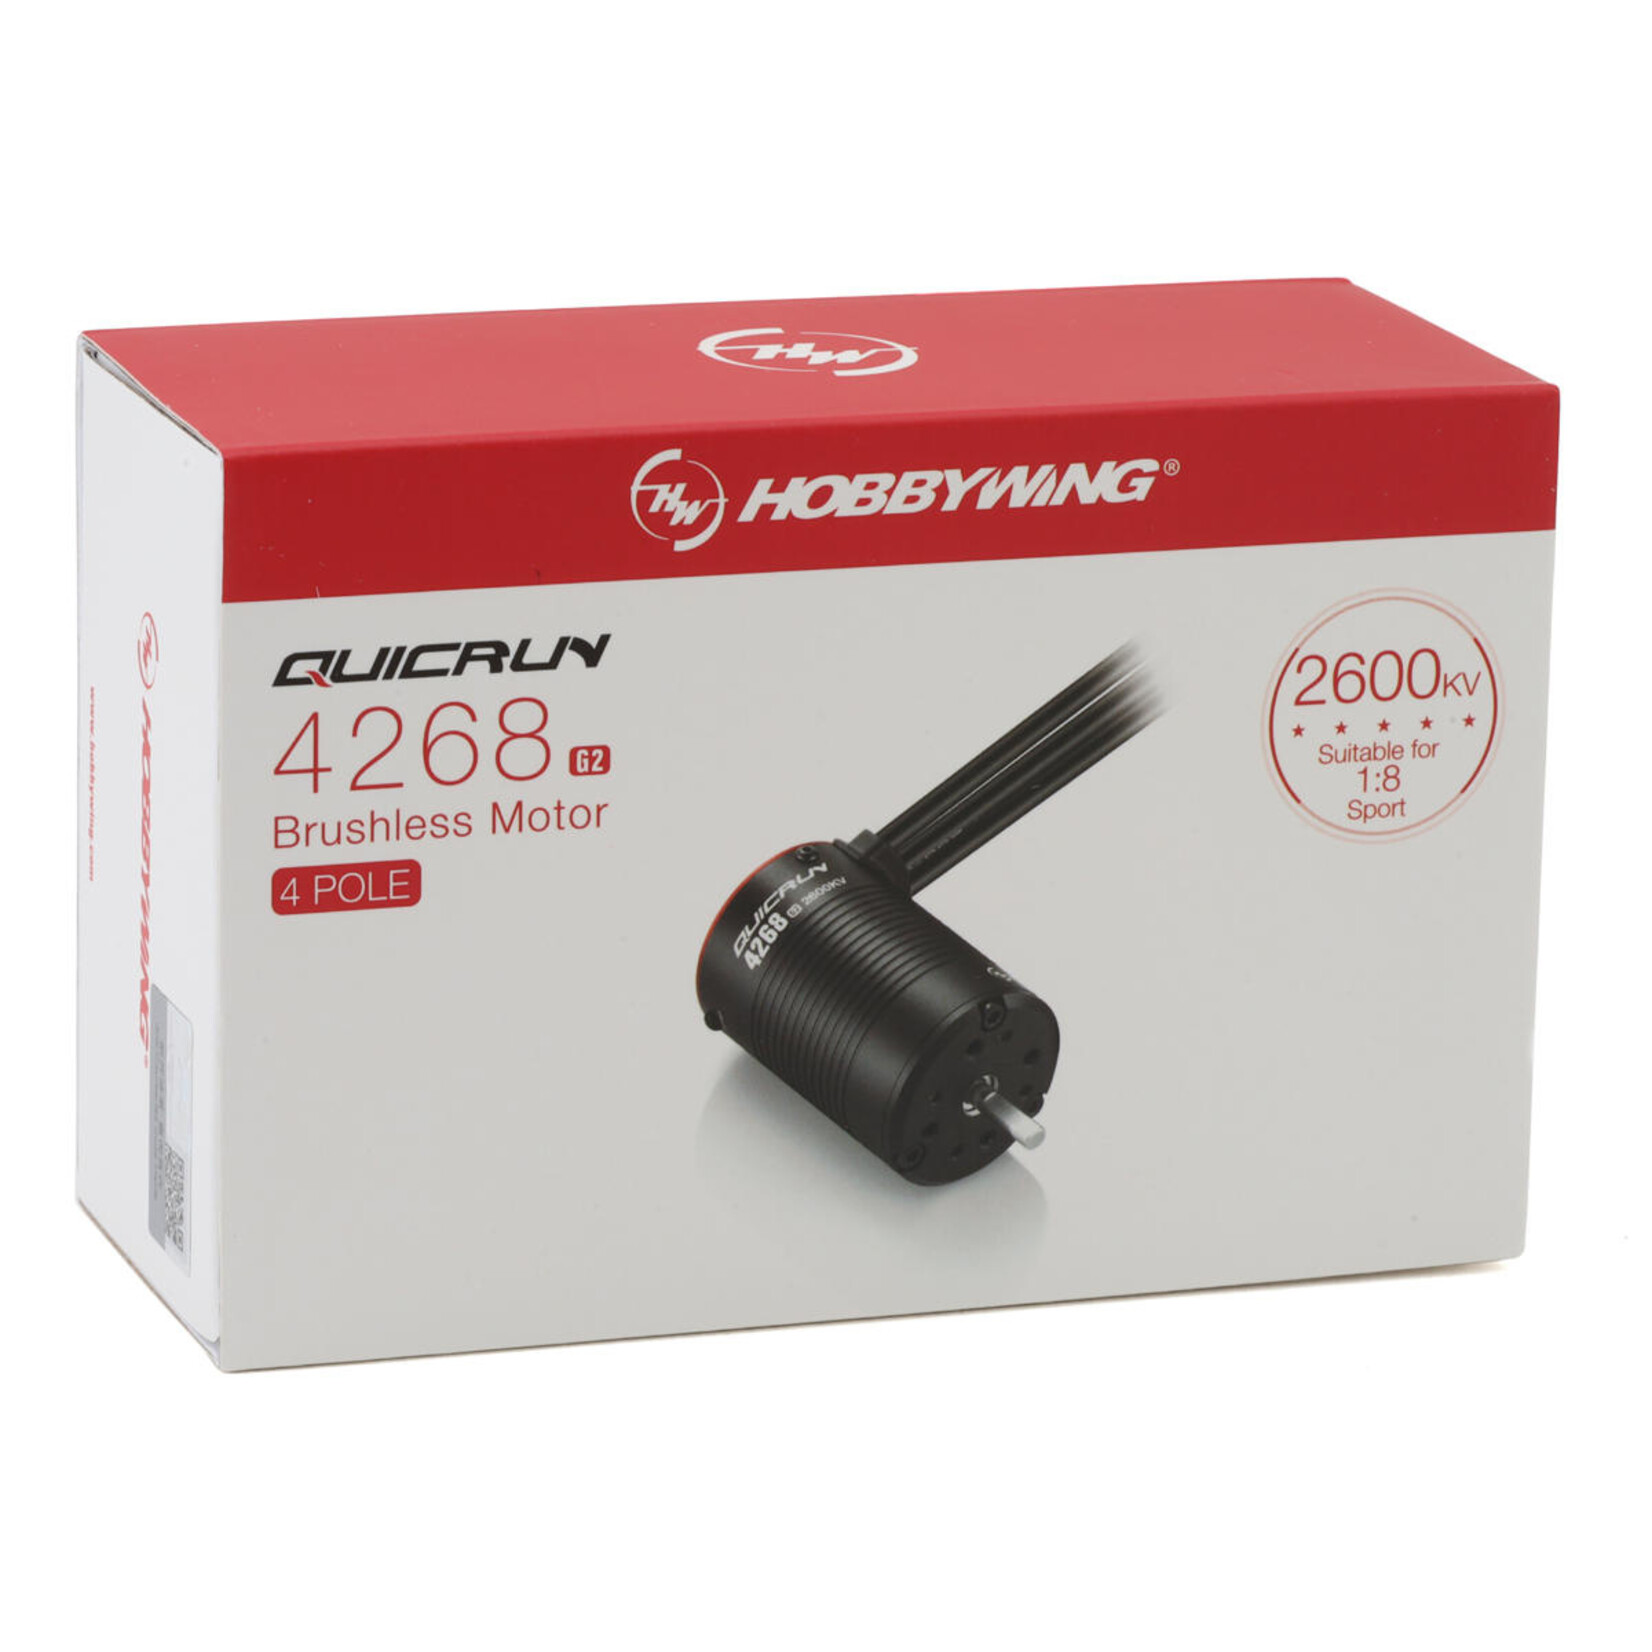 Hobbywing Hobbywing QuicRun 4268SL Sensorless Brushless Motor (2600kV) #30404600